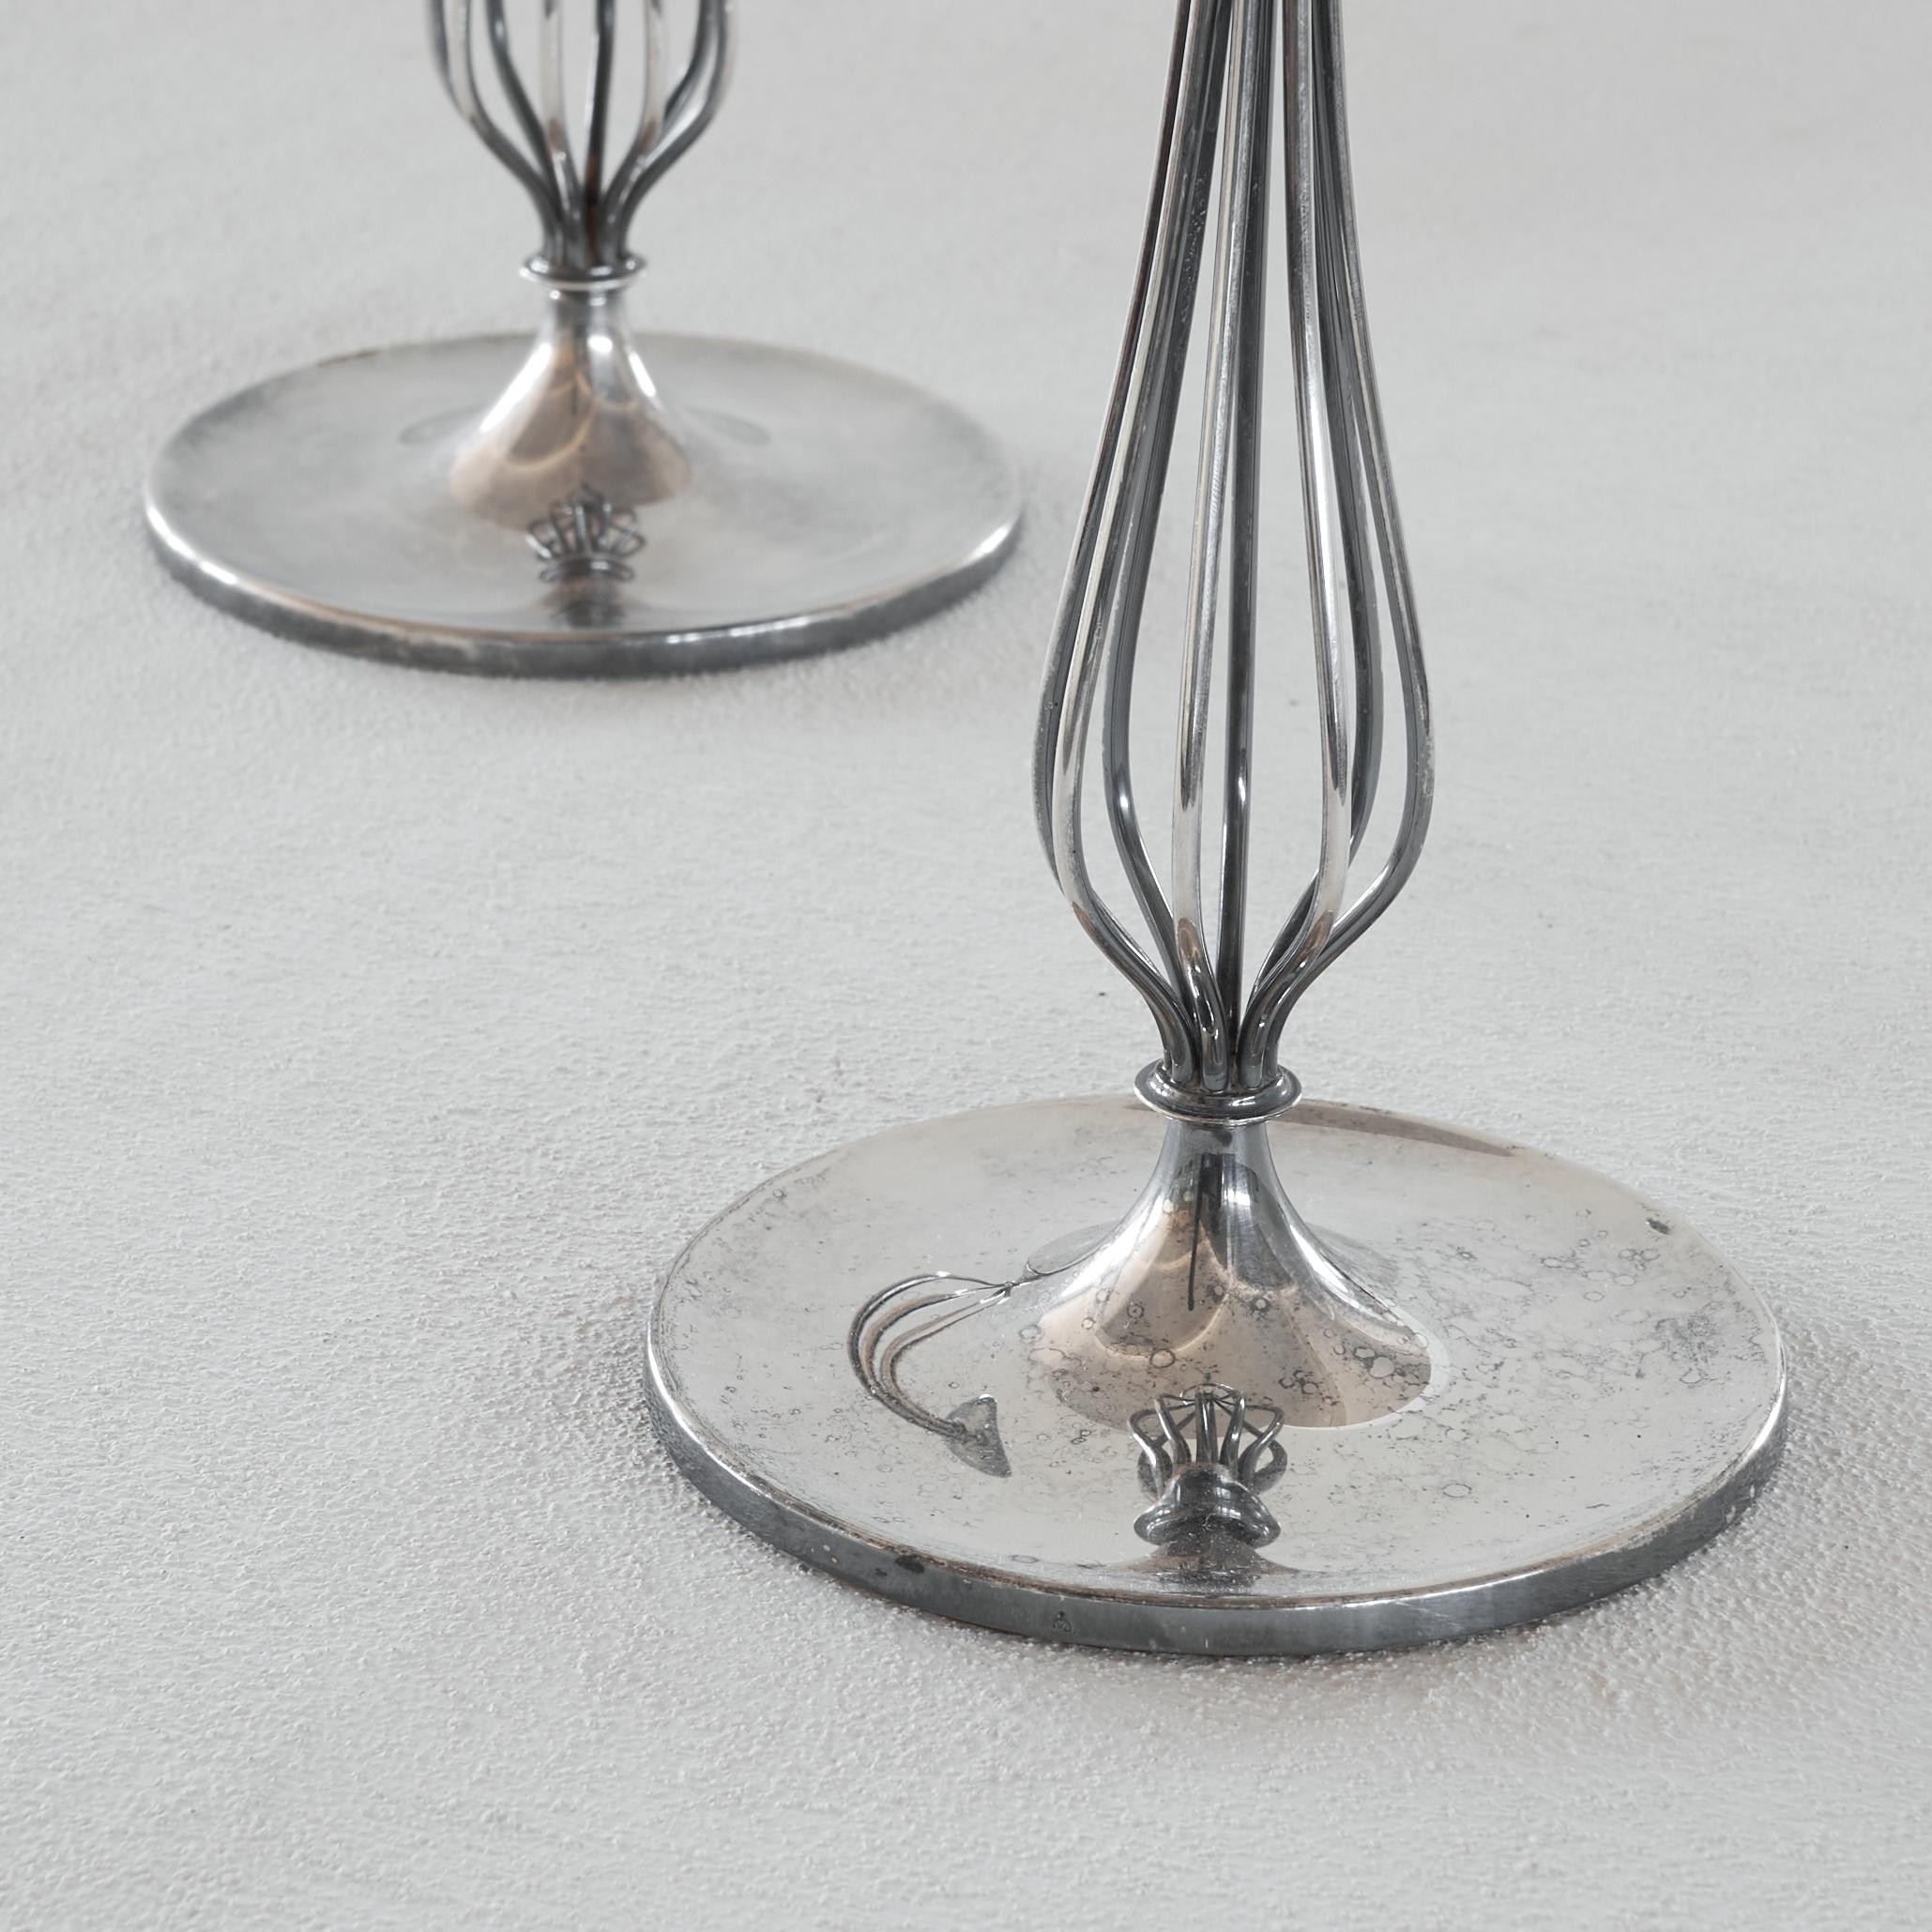 20th Century Gustav Beran Pair of Silver Plated Candle Holders Van Kempen & Begeer 1960s For Sale